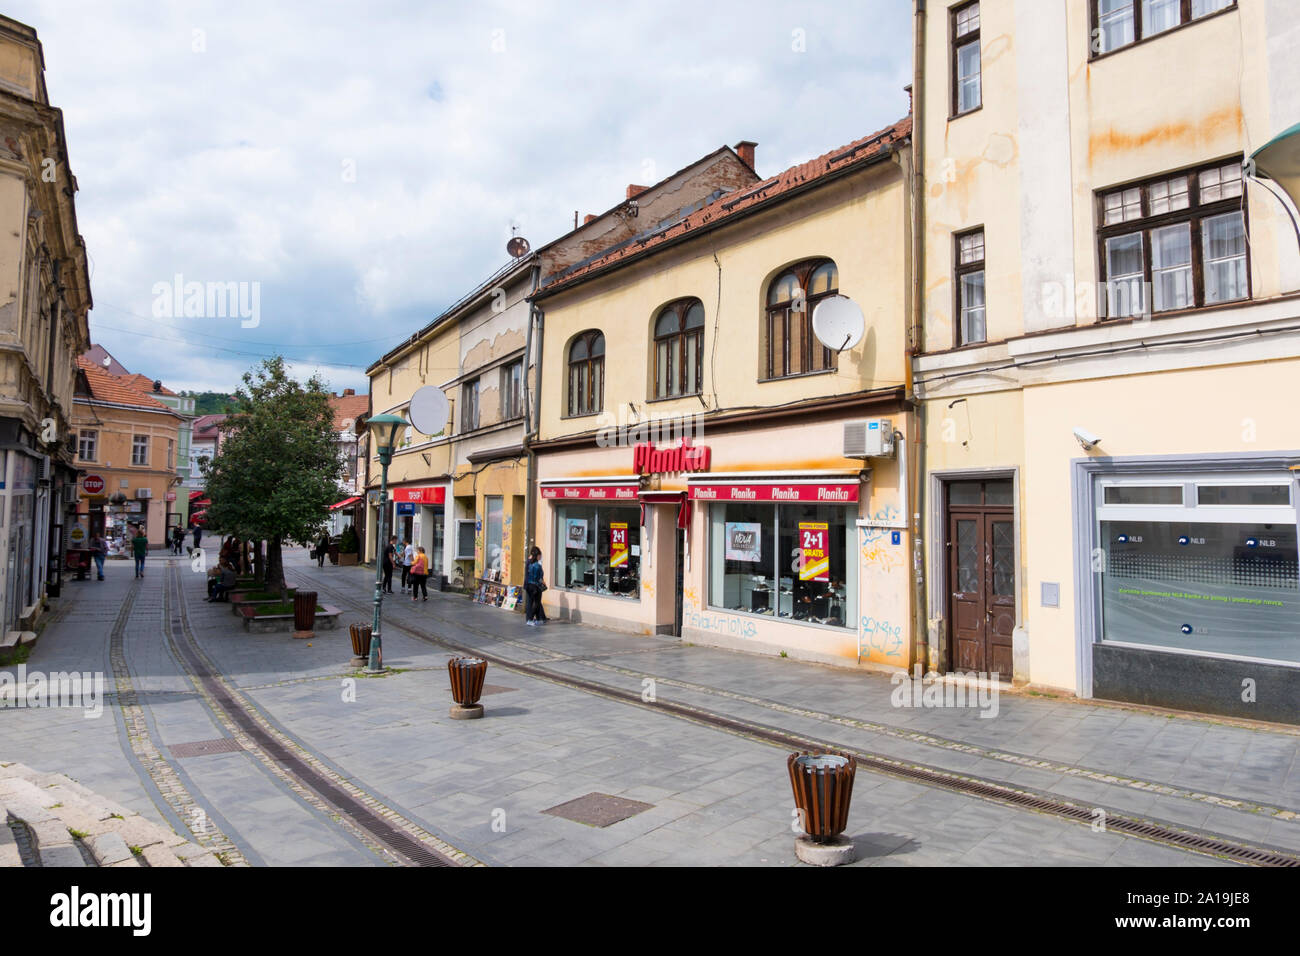 Turalibegova, old town, Tuzla, Bosnia and Herzegovina Stock Photo